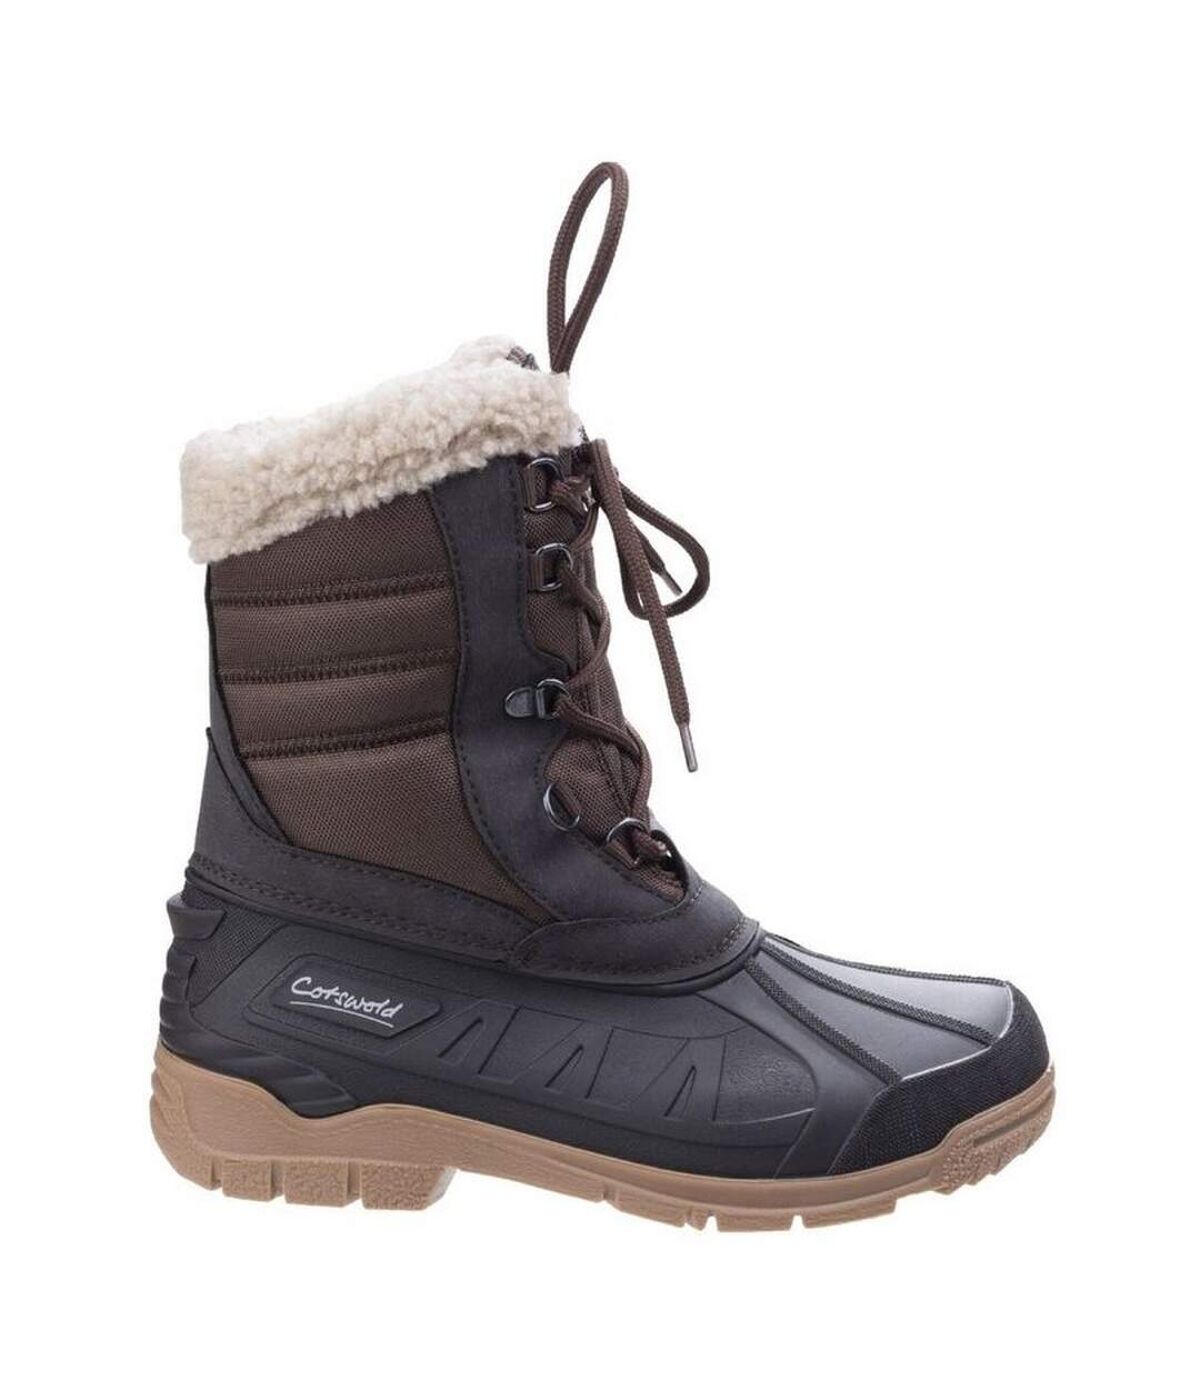 Cotswold Womens/Ladies Coset Waterproof Tall Hiking Boots (Brown) - UTFS4864